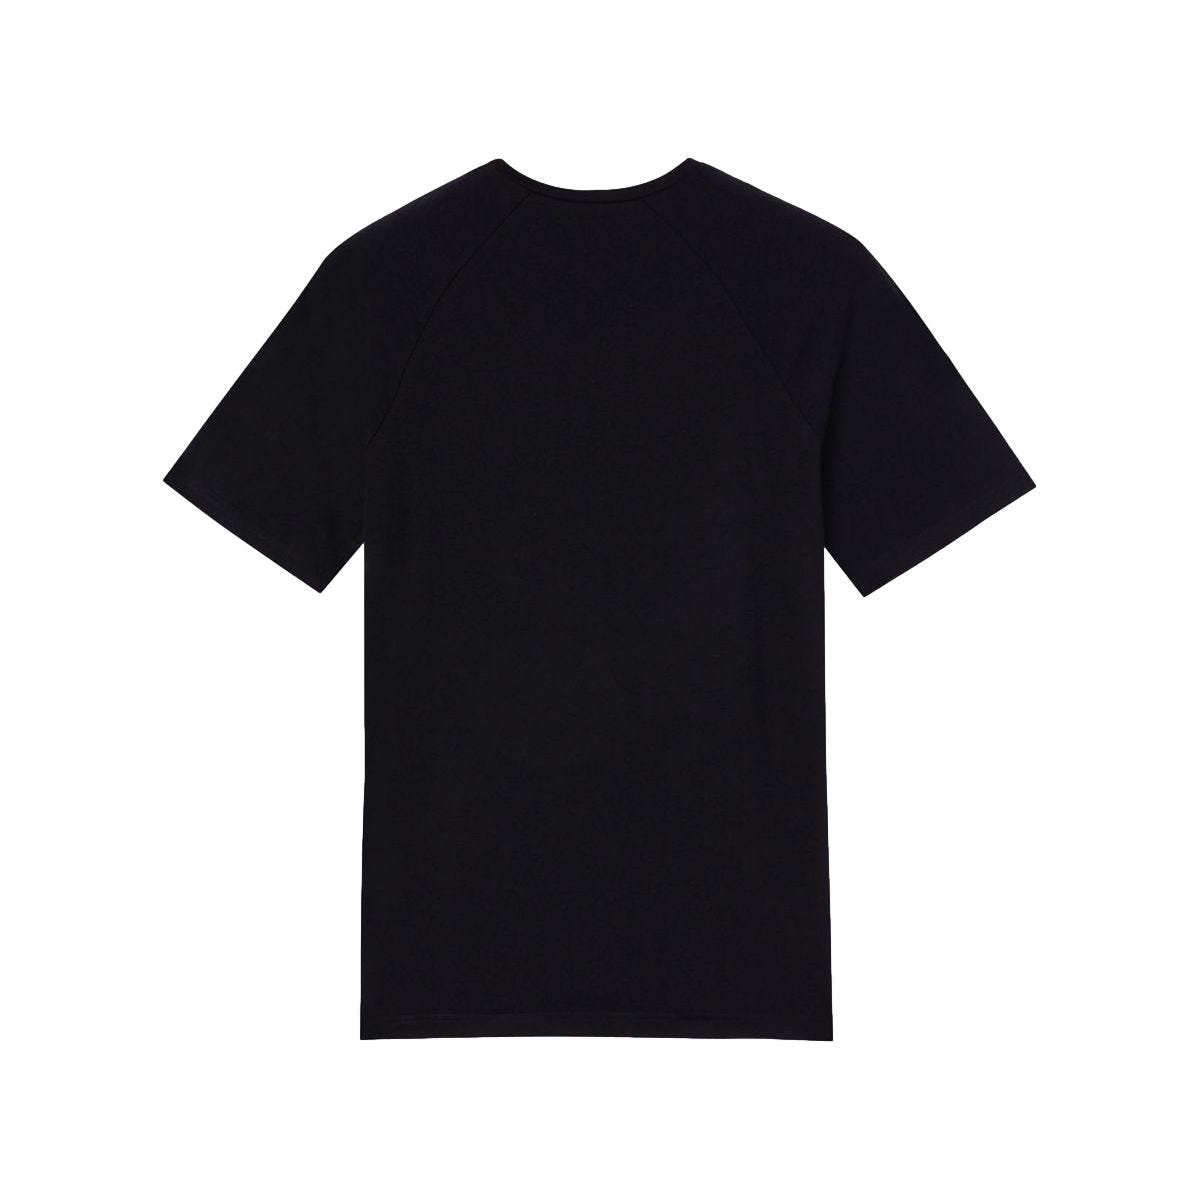 Tee-shirt Temp-IQ Noir - Dickies - Taille 3XL 1